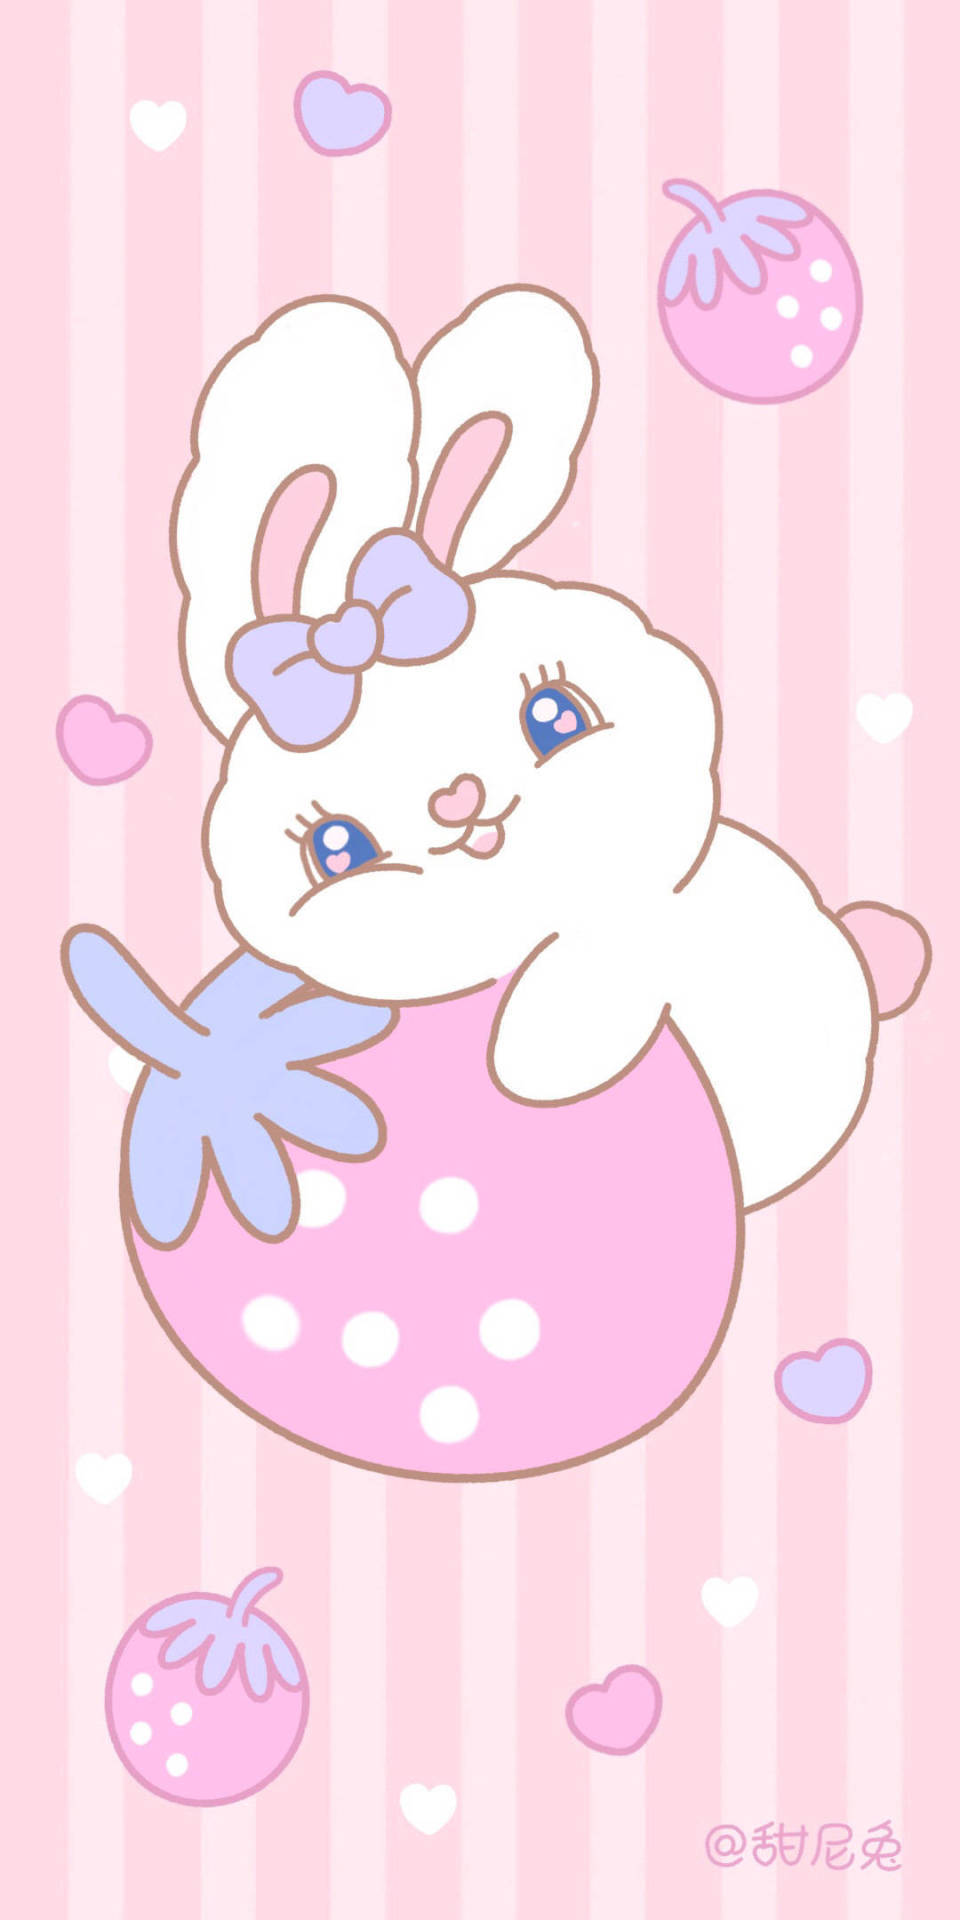 Download White Rabbit Embracing Strawberry Wallpaper